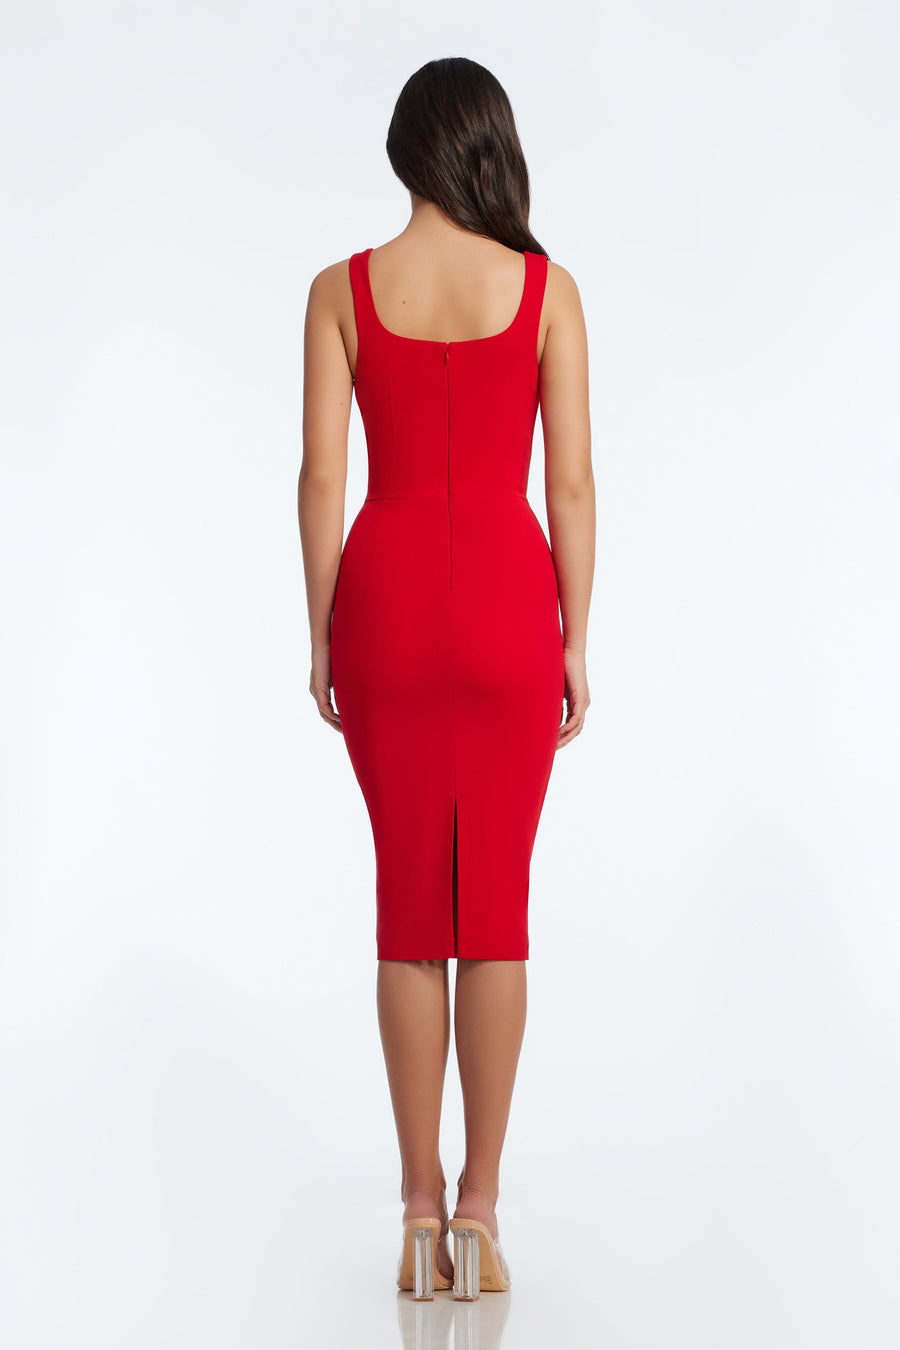 Sloane Dress / ROUGE